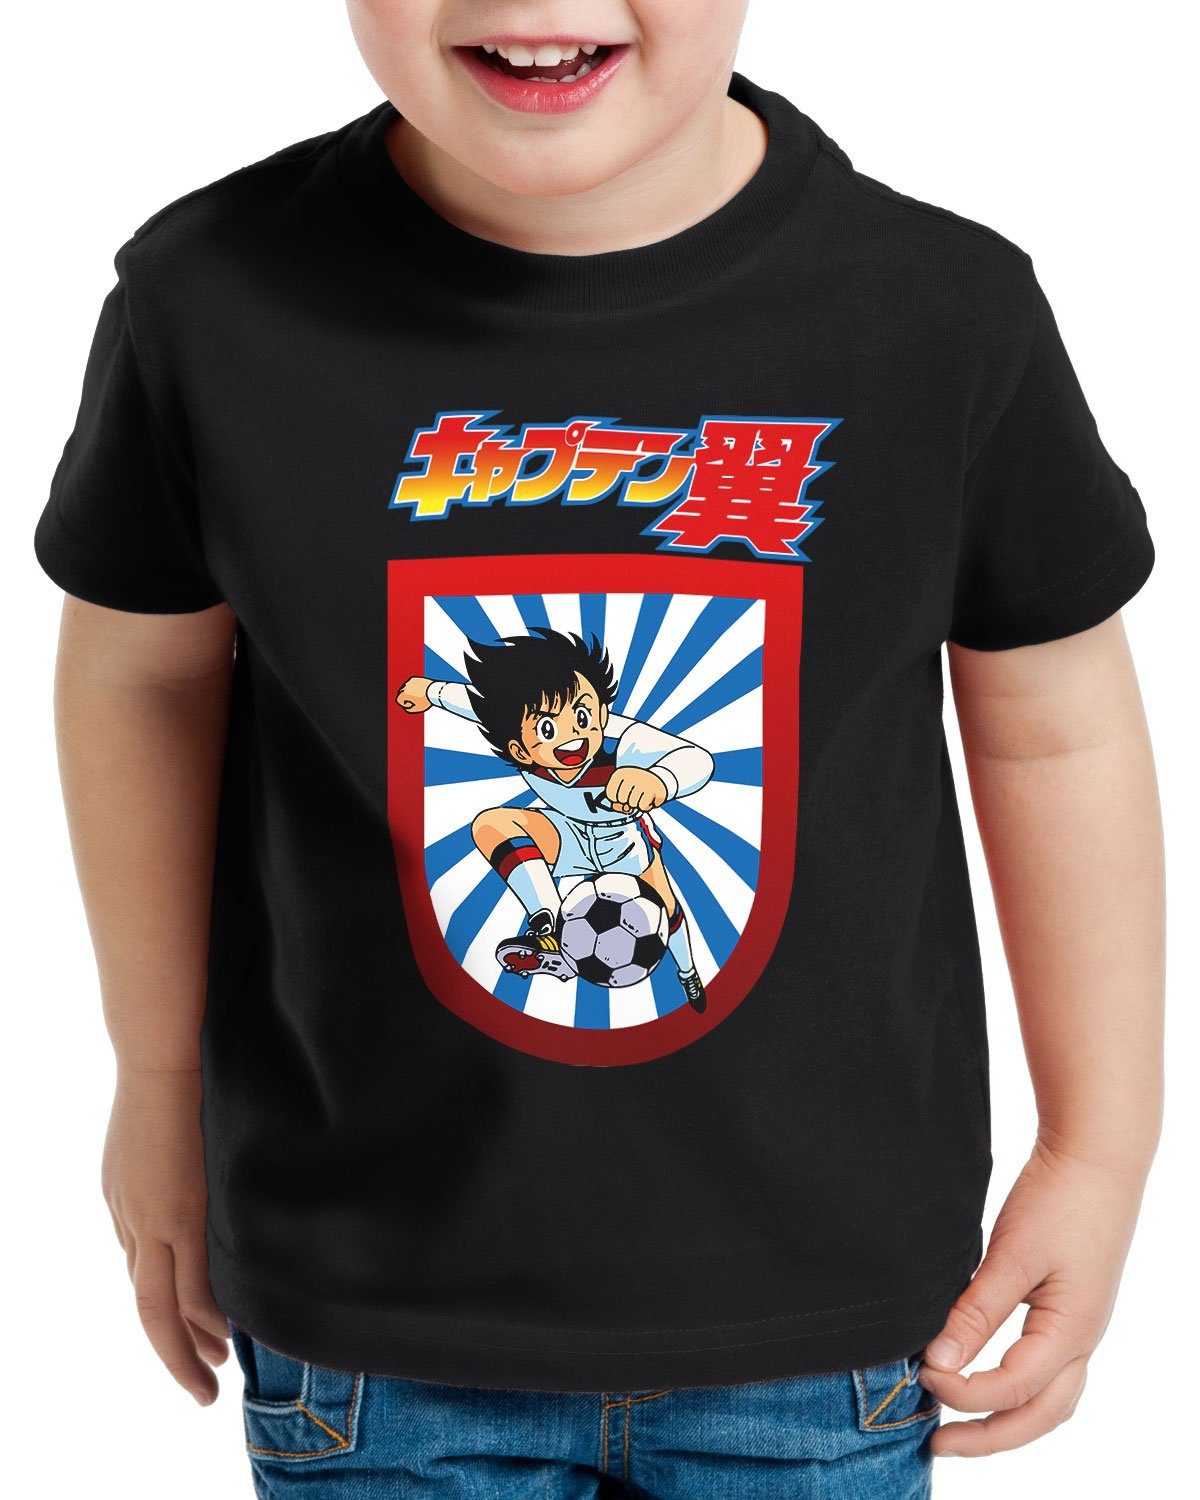 style3 Print-Shirt Kinder T-Shirt Tsubasa tollen fußballstars wm em schwarz